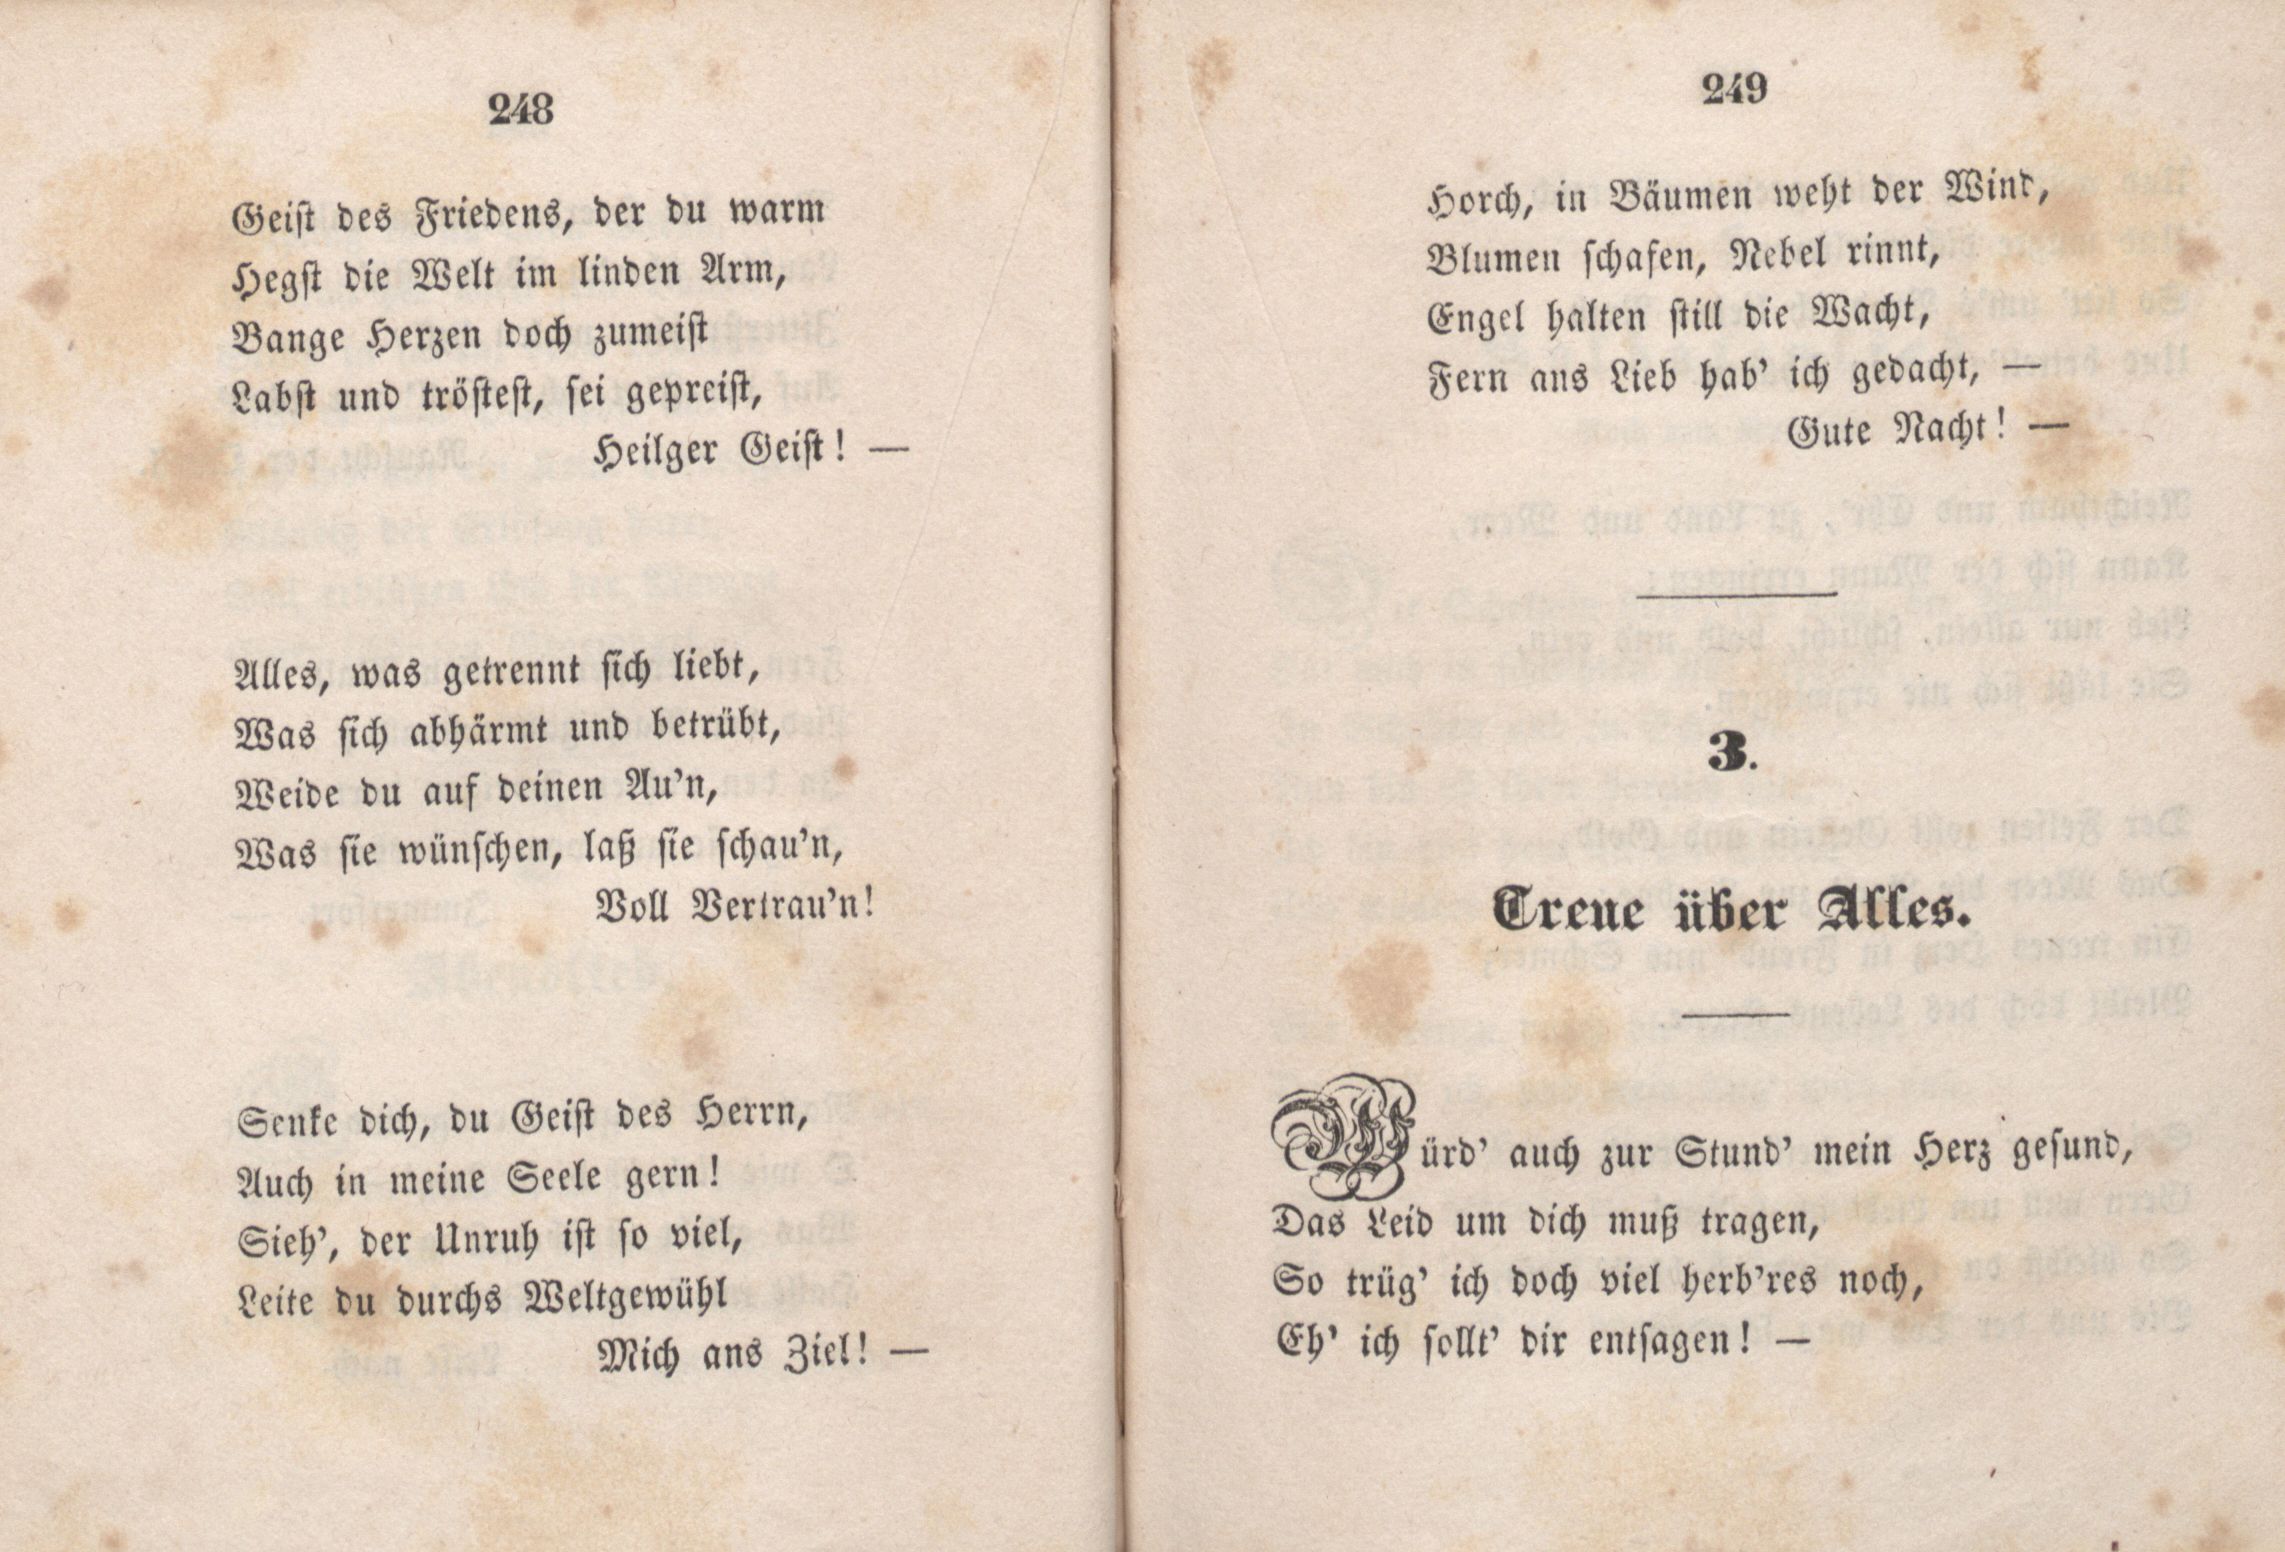 Treue über Alles (1846) | 1. (248-249) Main body of text